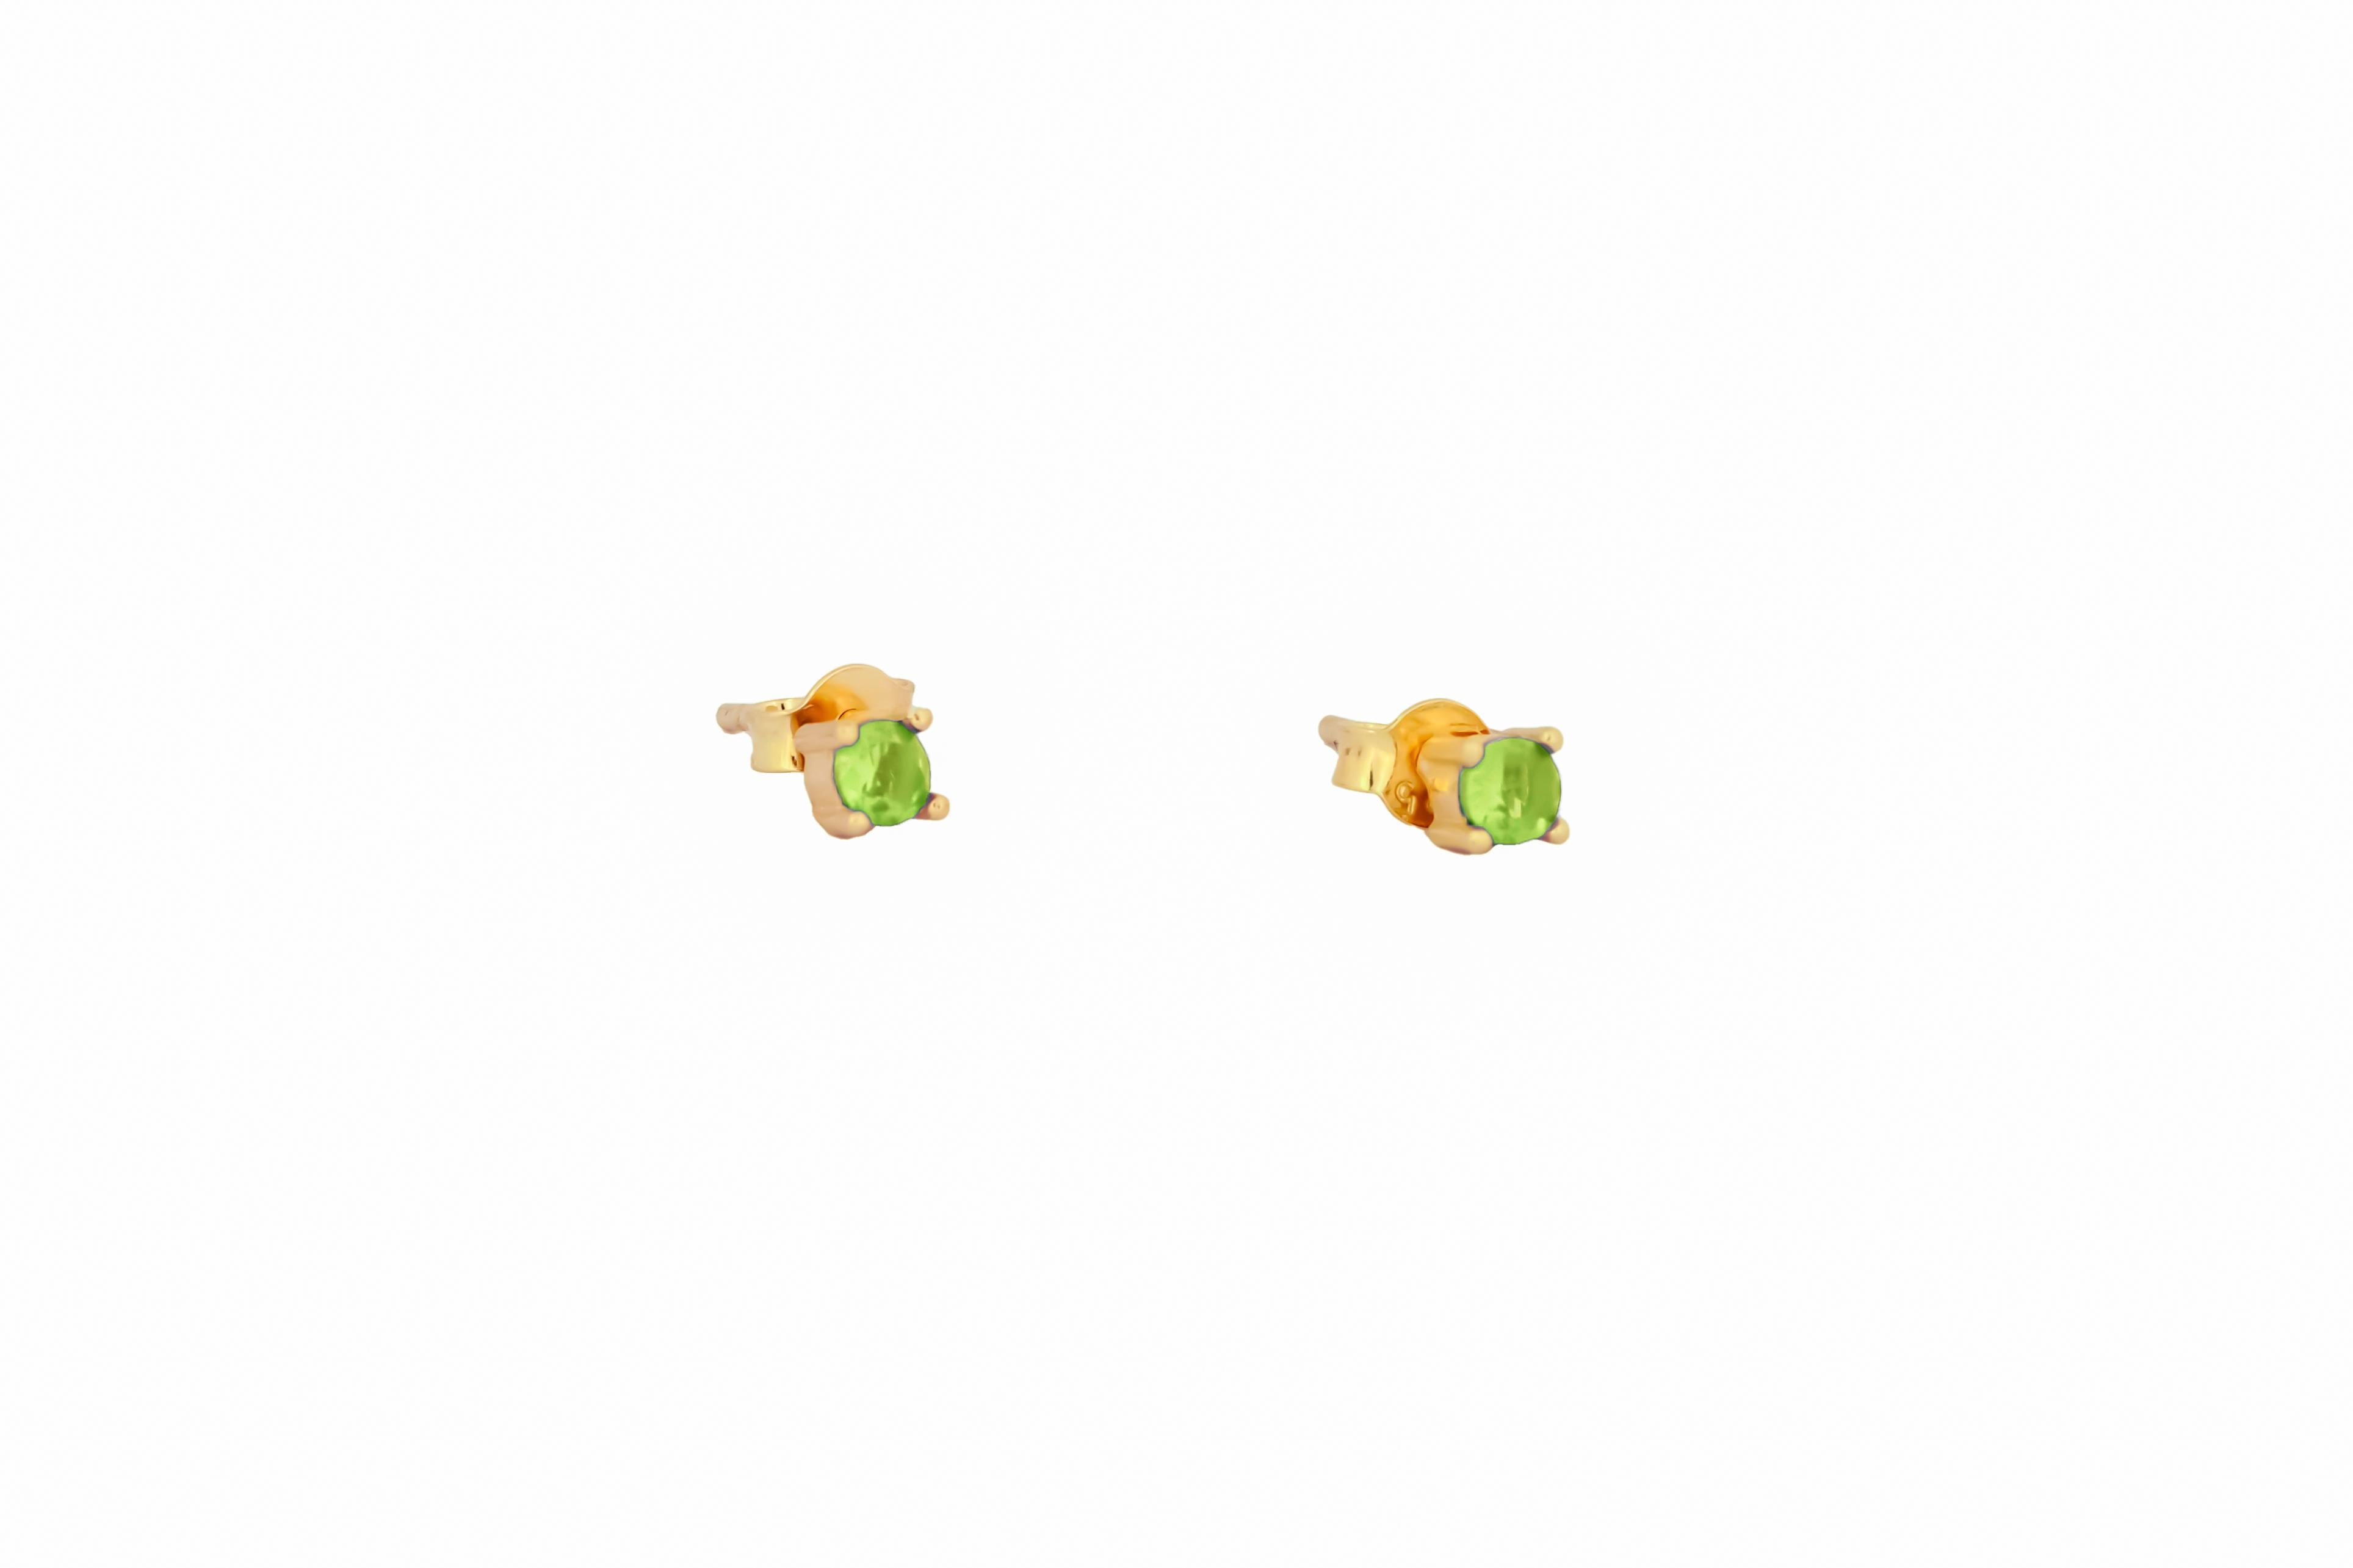 14 ct Gold Lab Peridot Stud Earrings.  
3 mm peridot earrings. Green gemstone earrings. Small delicate gold earrings studs. Four prong studs. Minimalist peridot earrings.

Metal: 14k solid gold
Earrings goes with gold clasps

Gemstones:
2 green